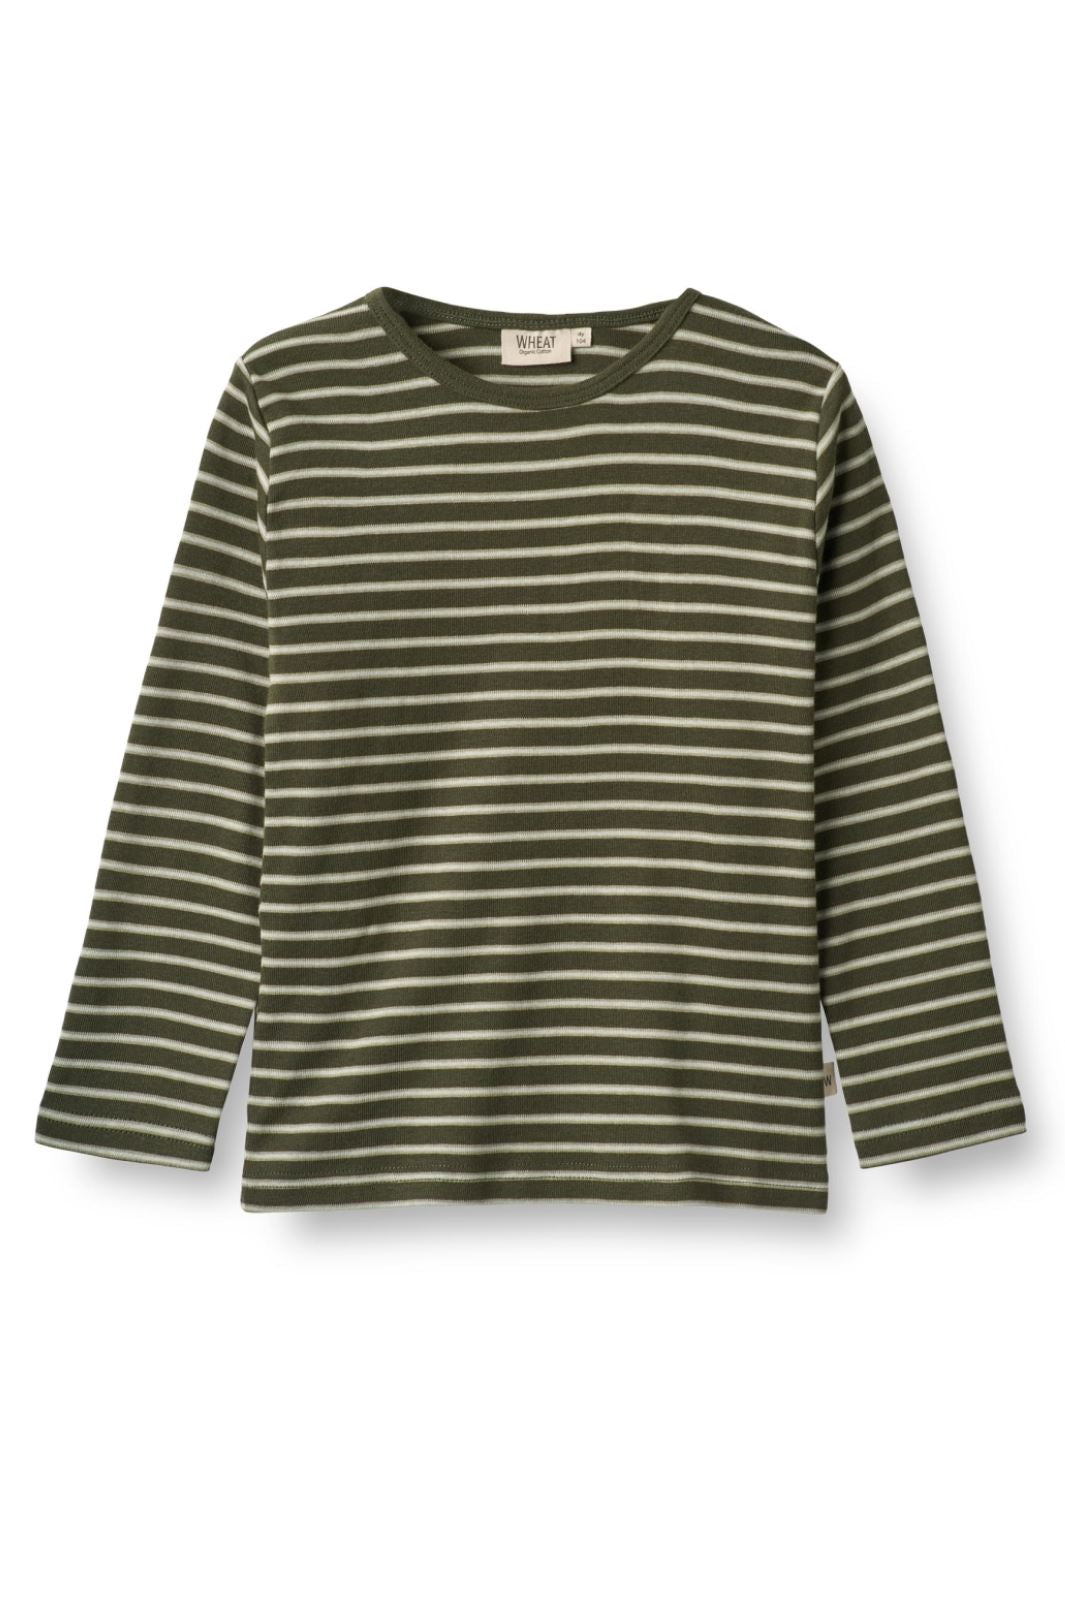 Wheat - T-Shirt Stig - 4076 dark green stripe Bluser 